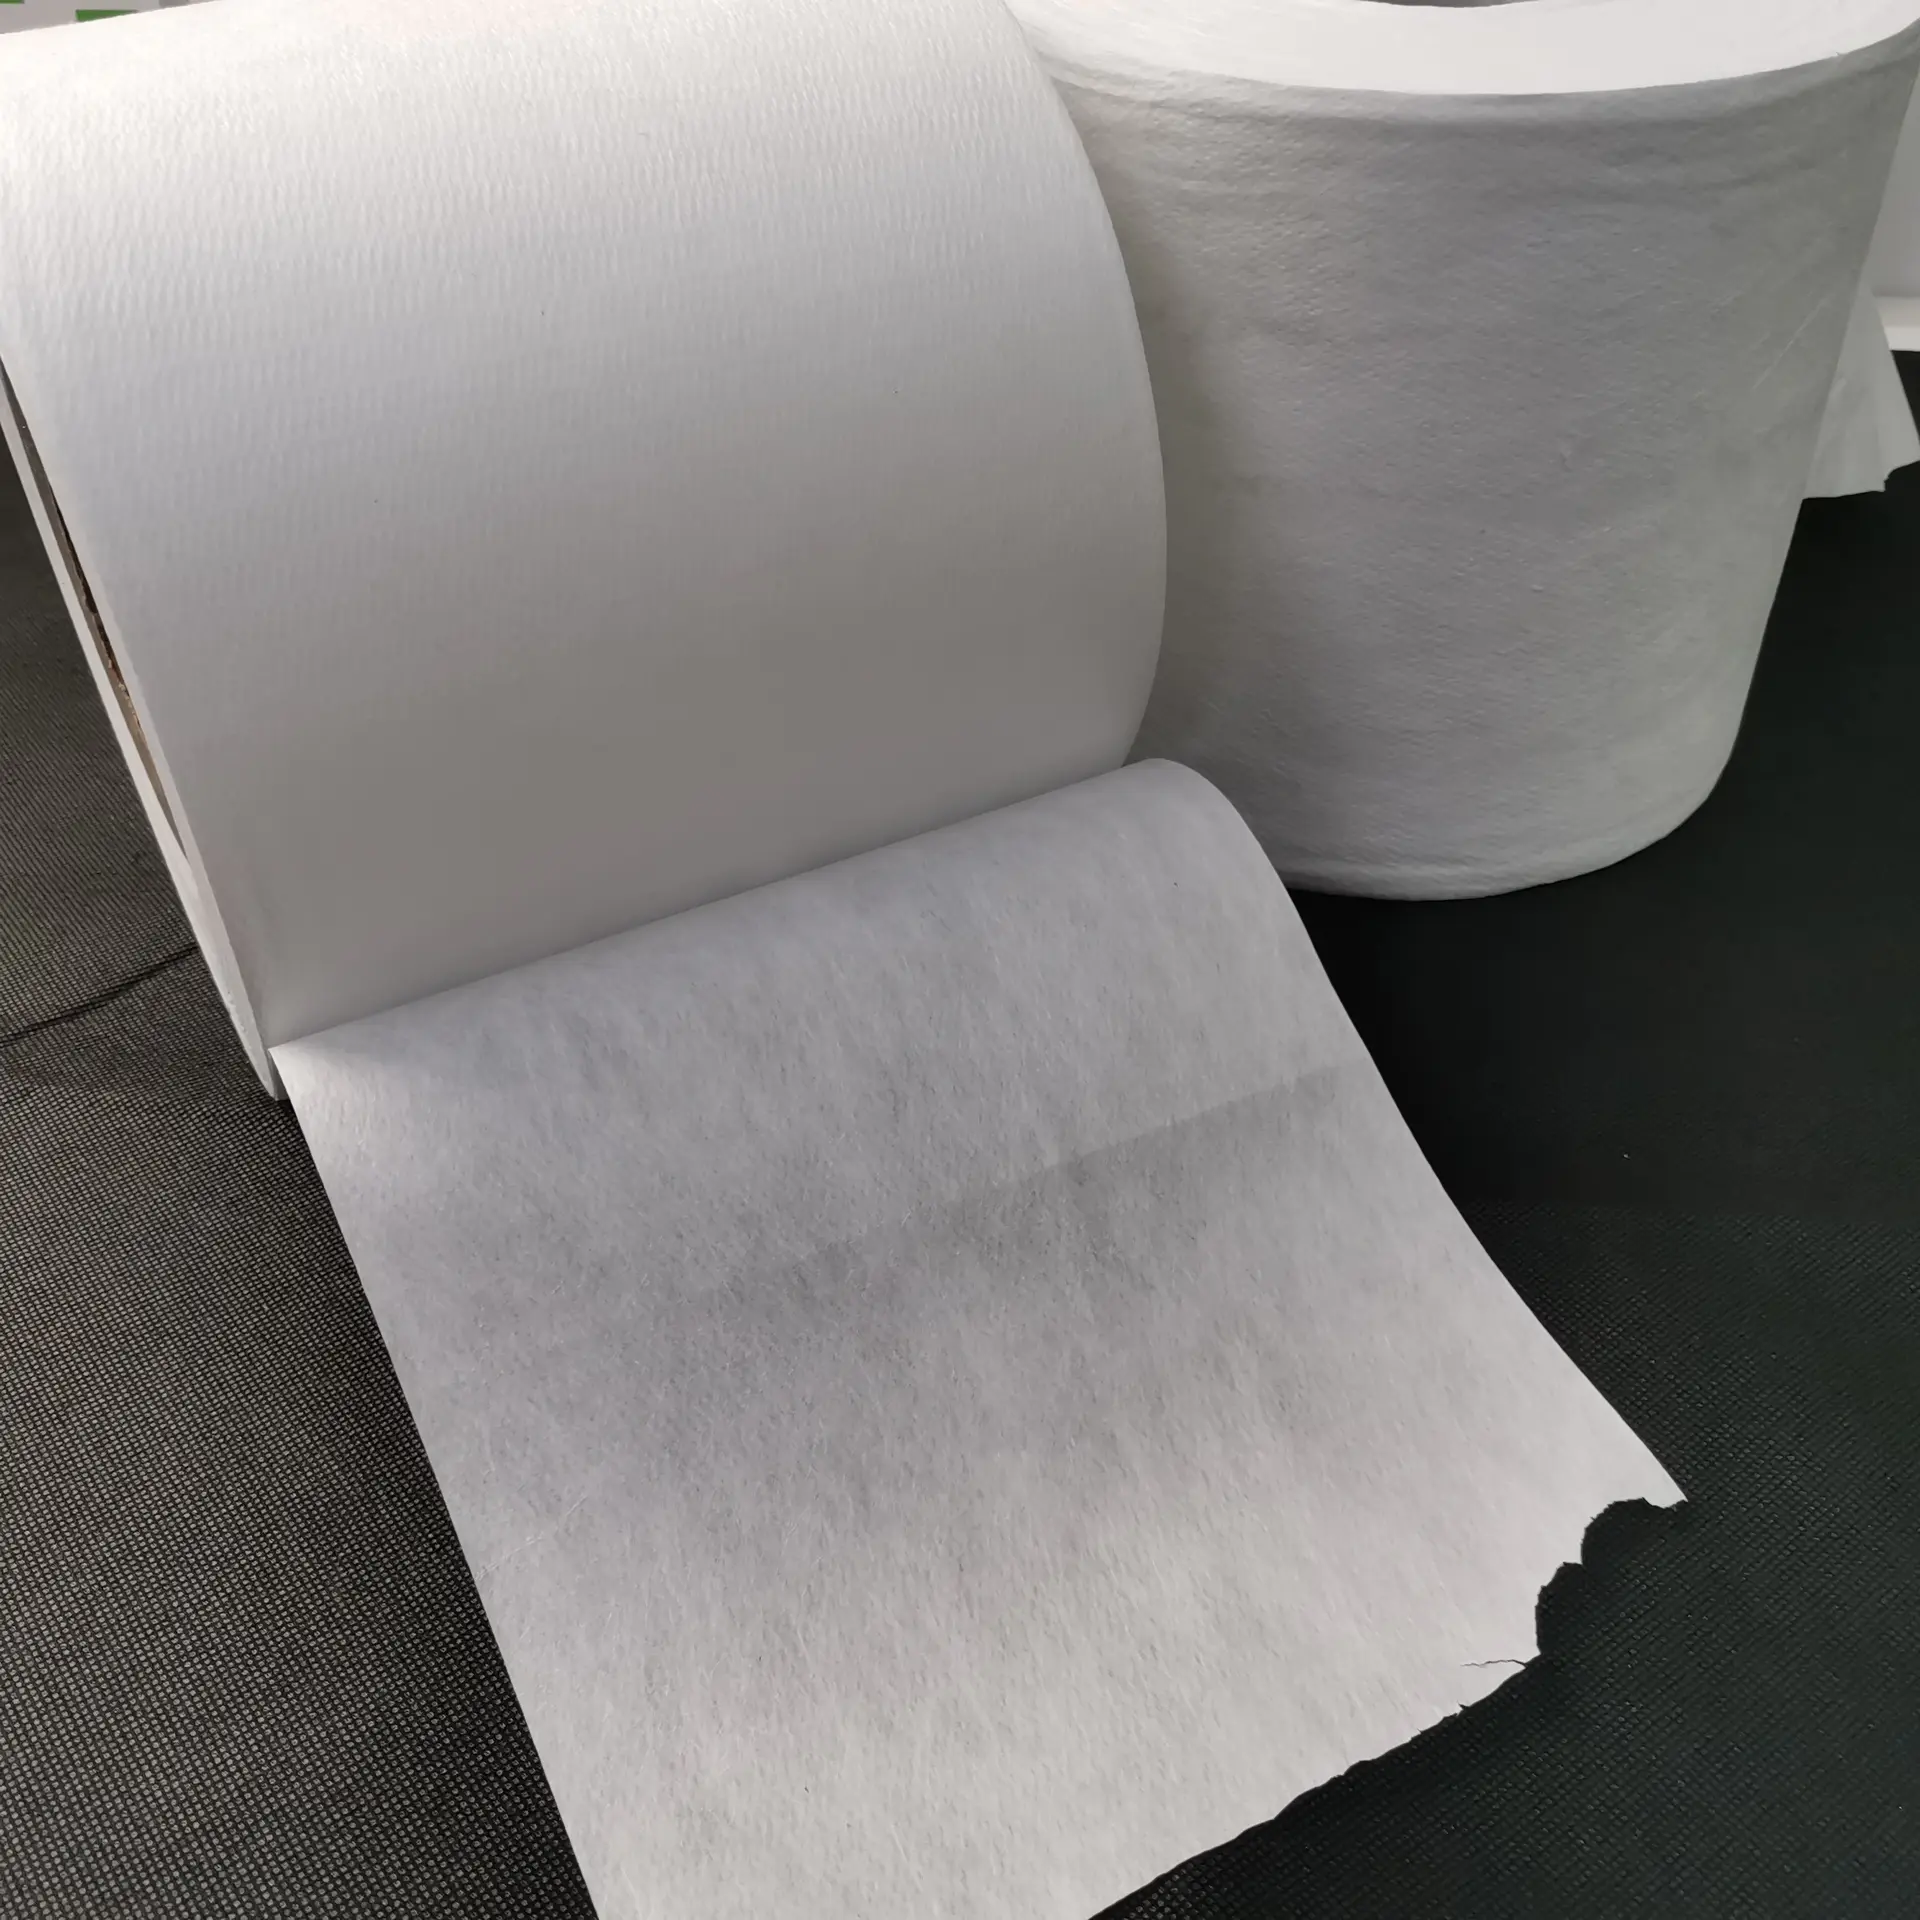 Factory direct supply 100% polypropylene spunbond meltblown non woven fabric